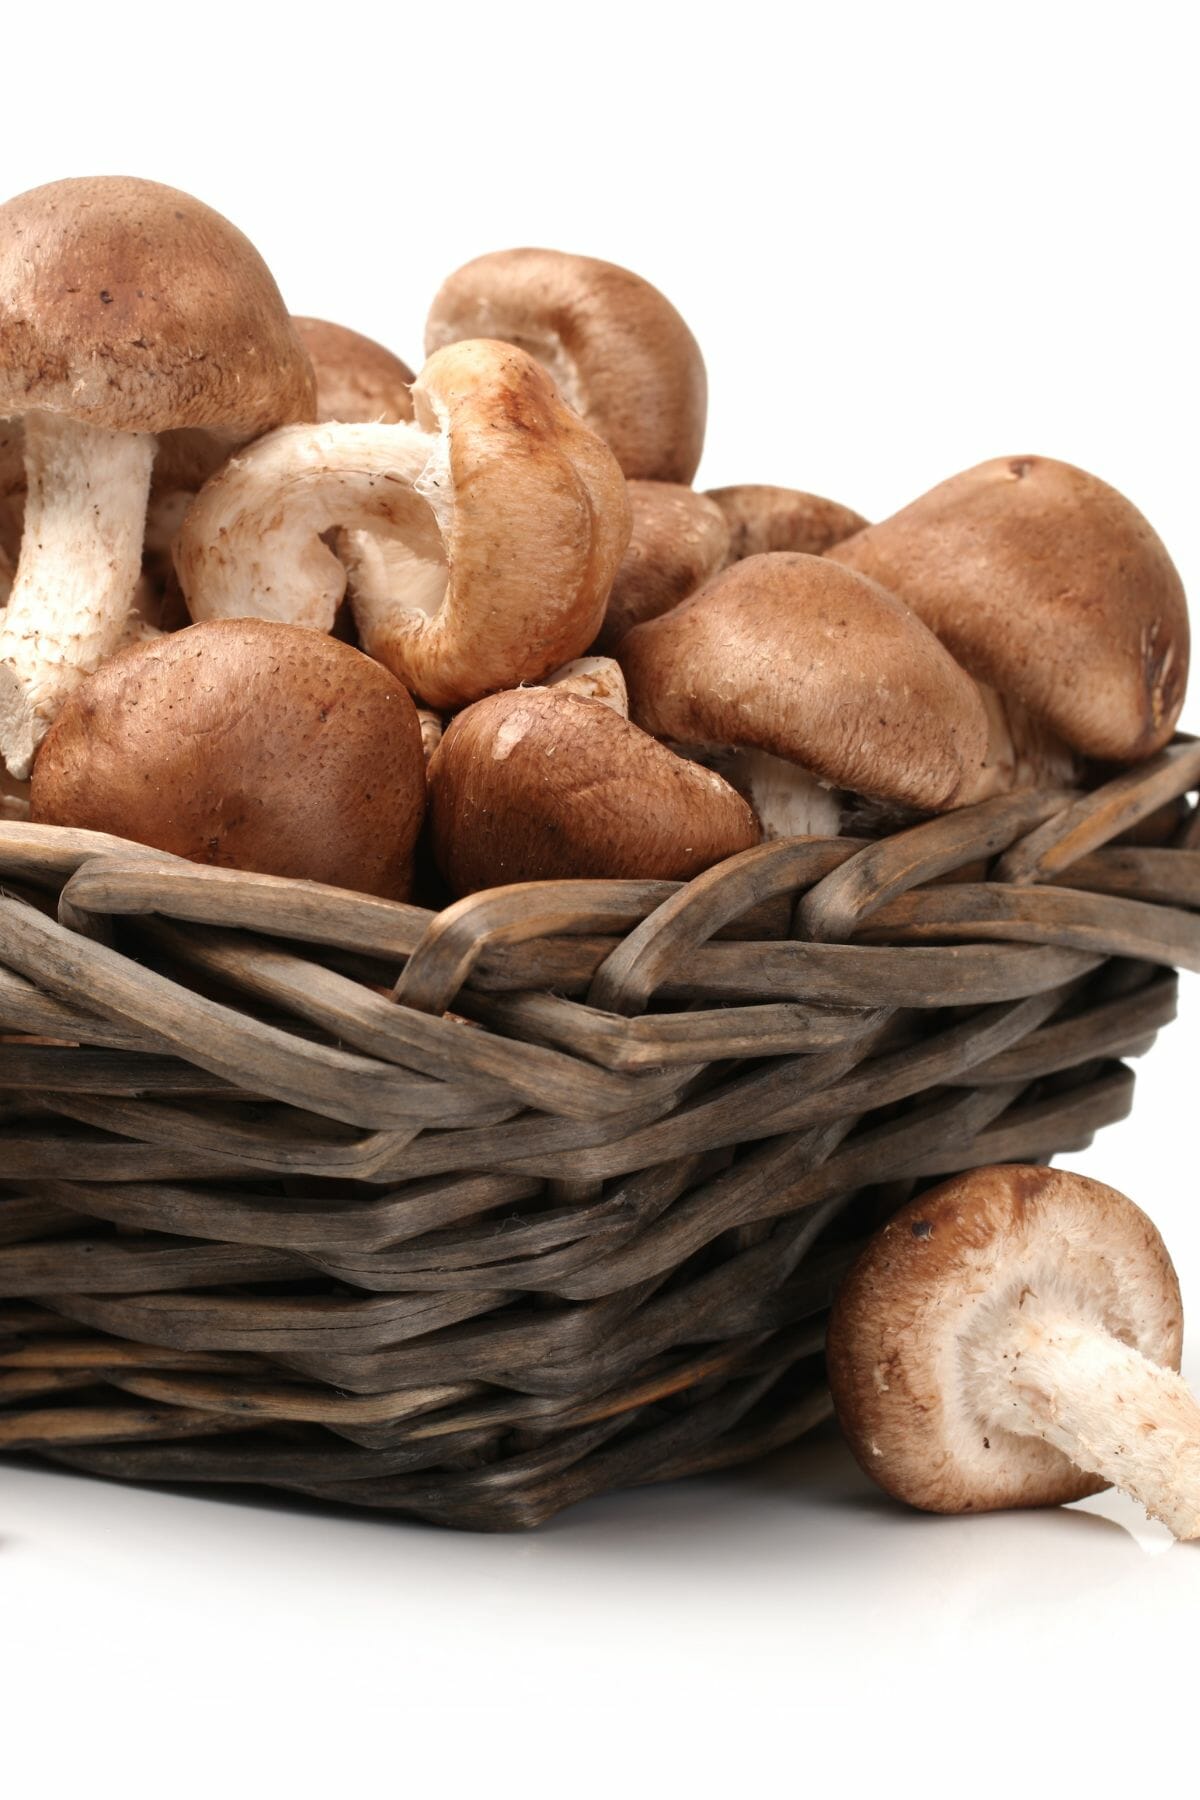 a basket of mushrooms